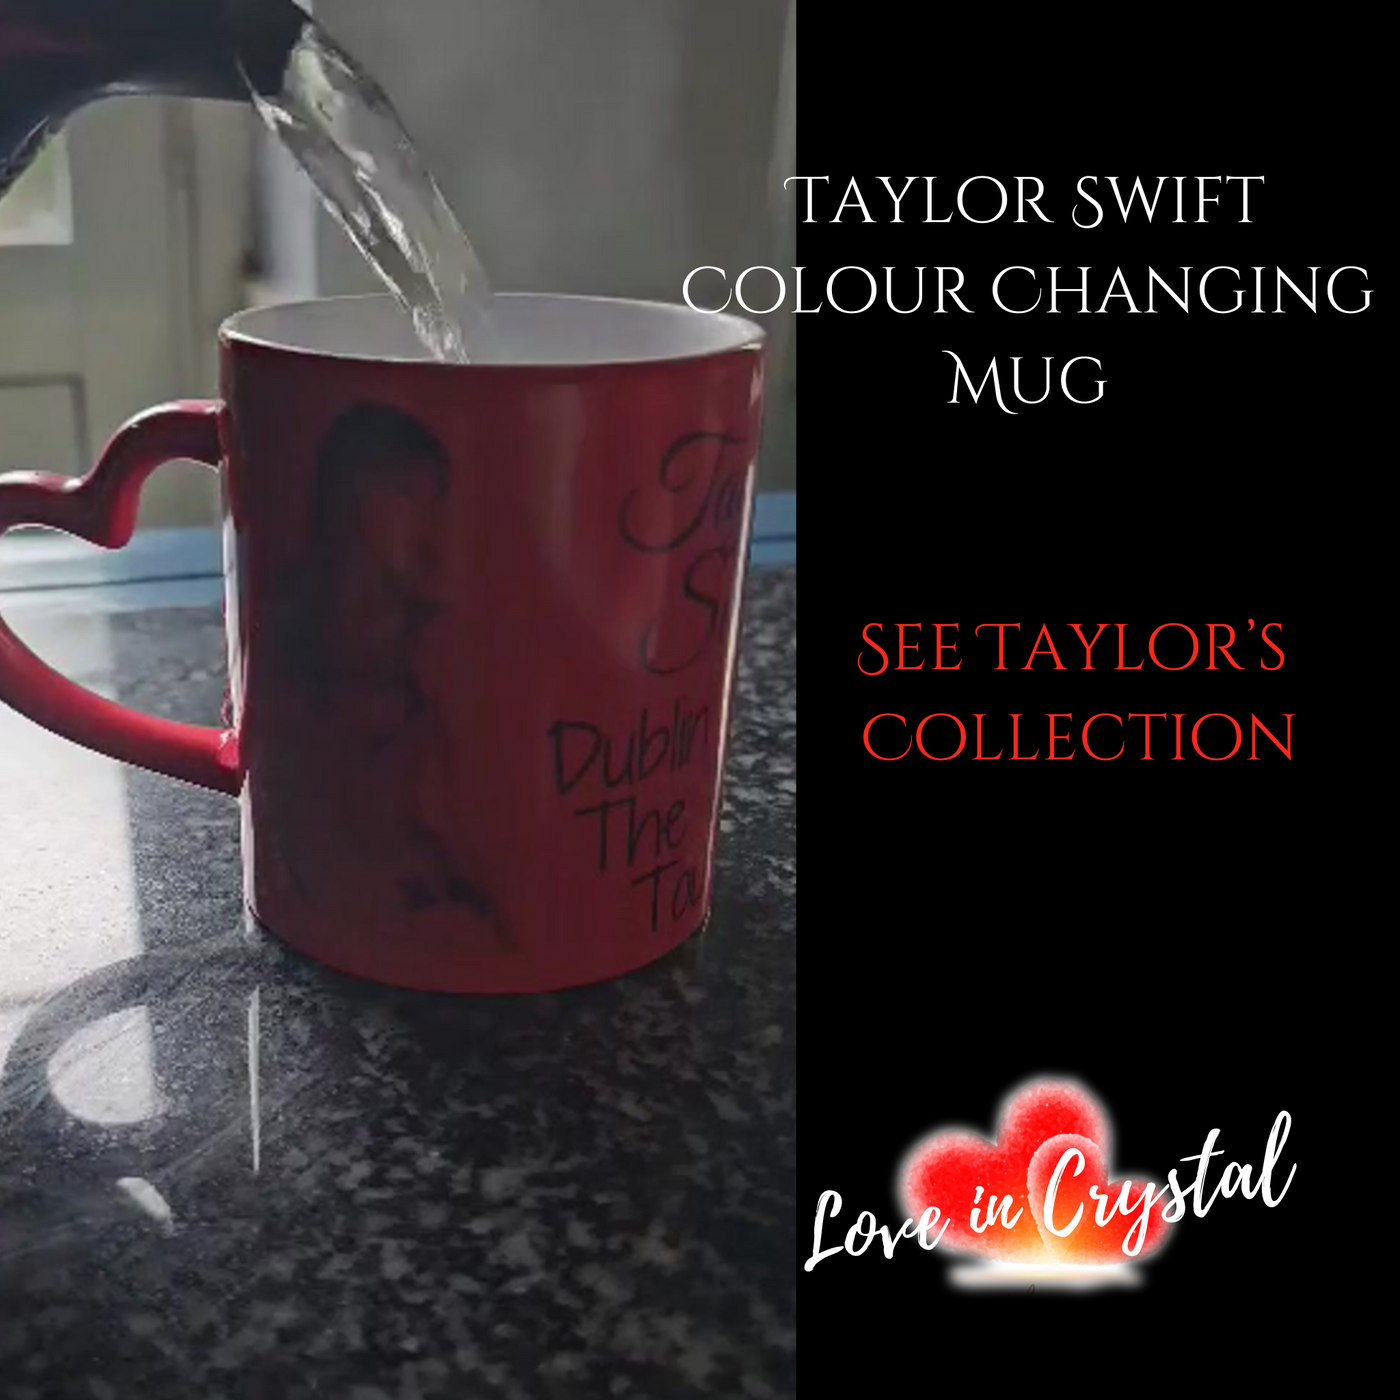 Taylor Swift colour changing mug